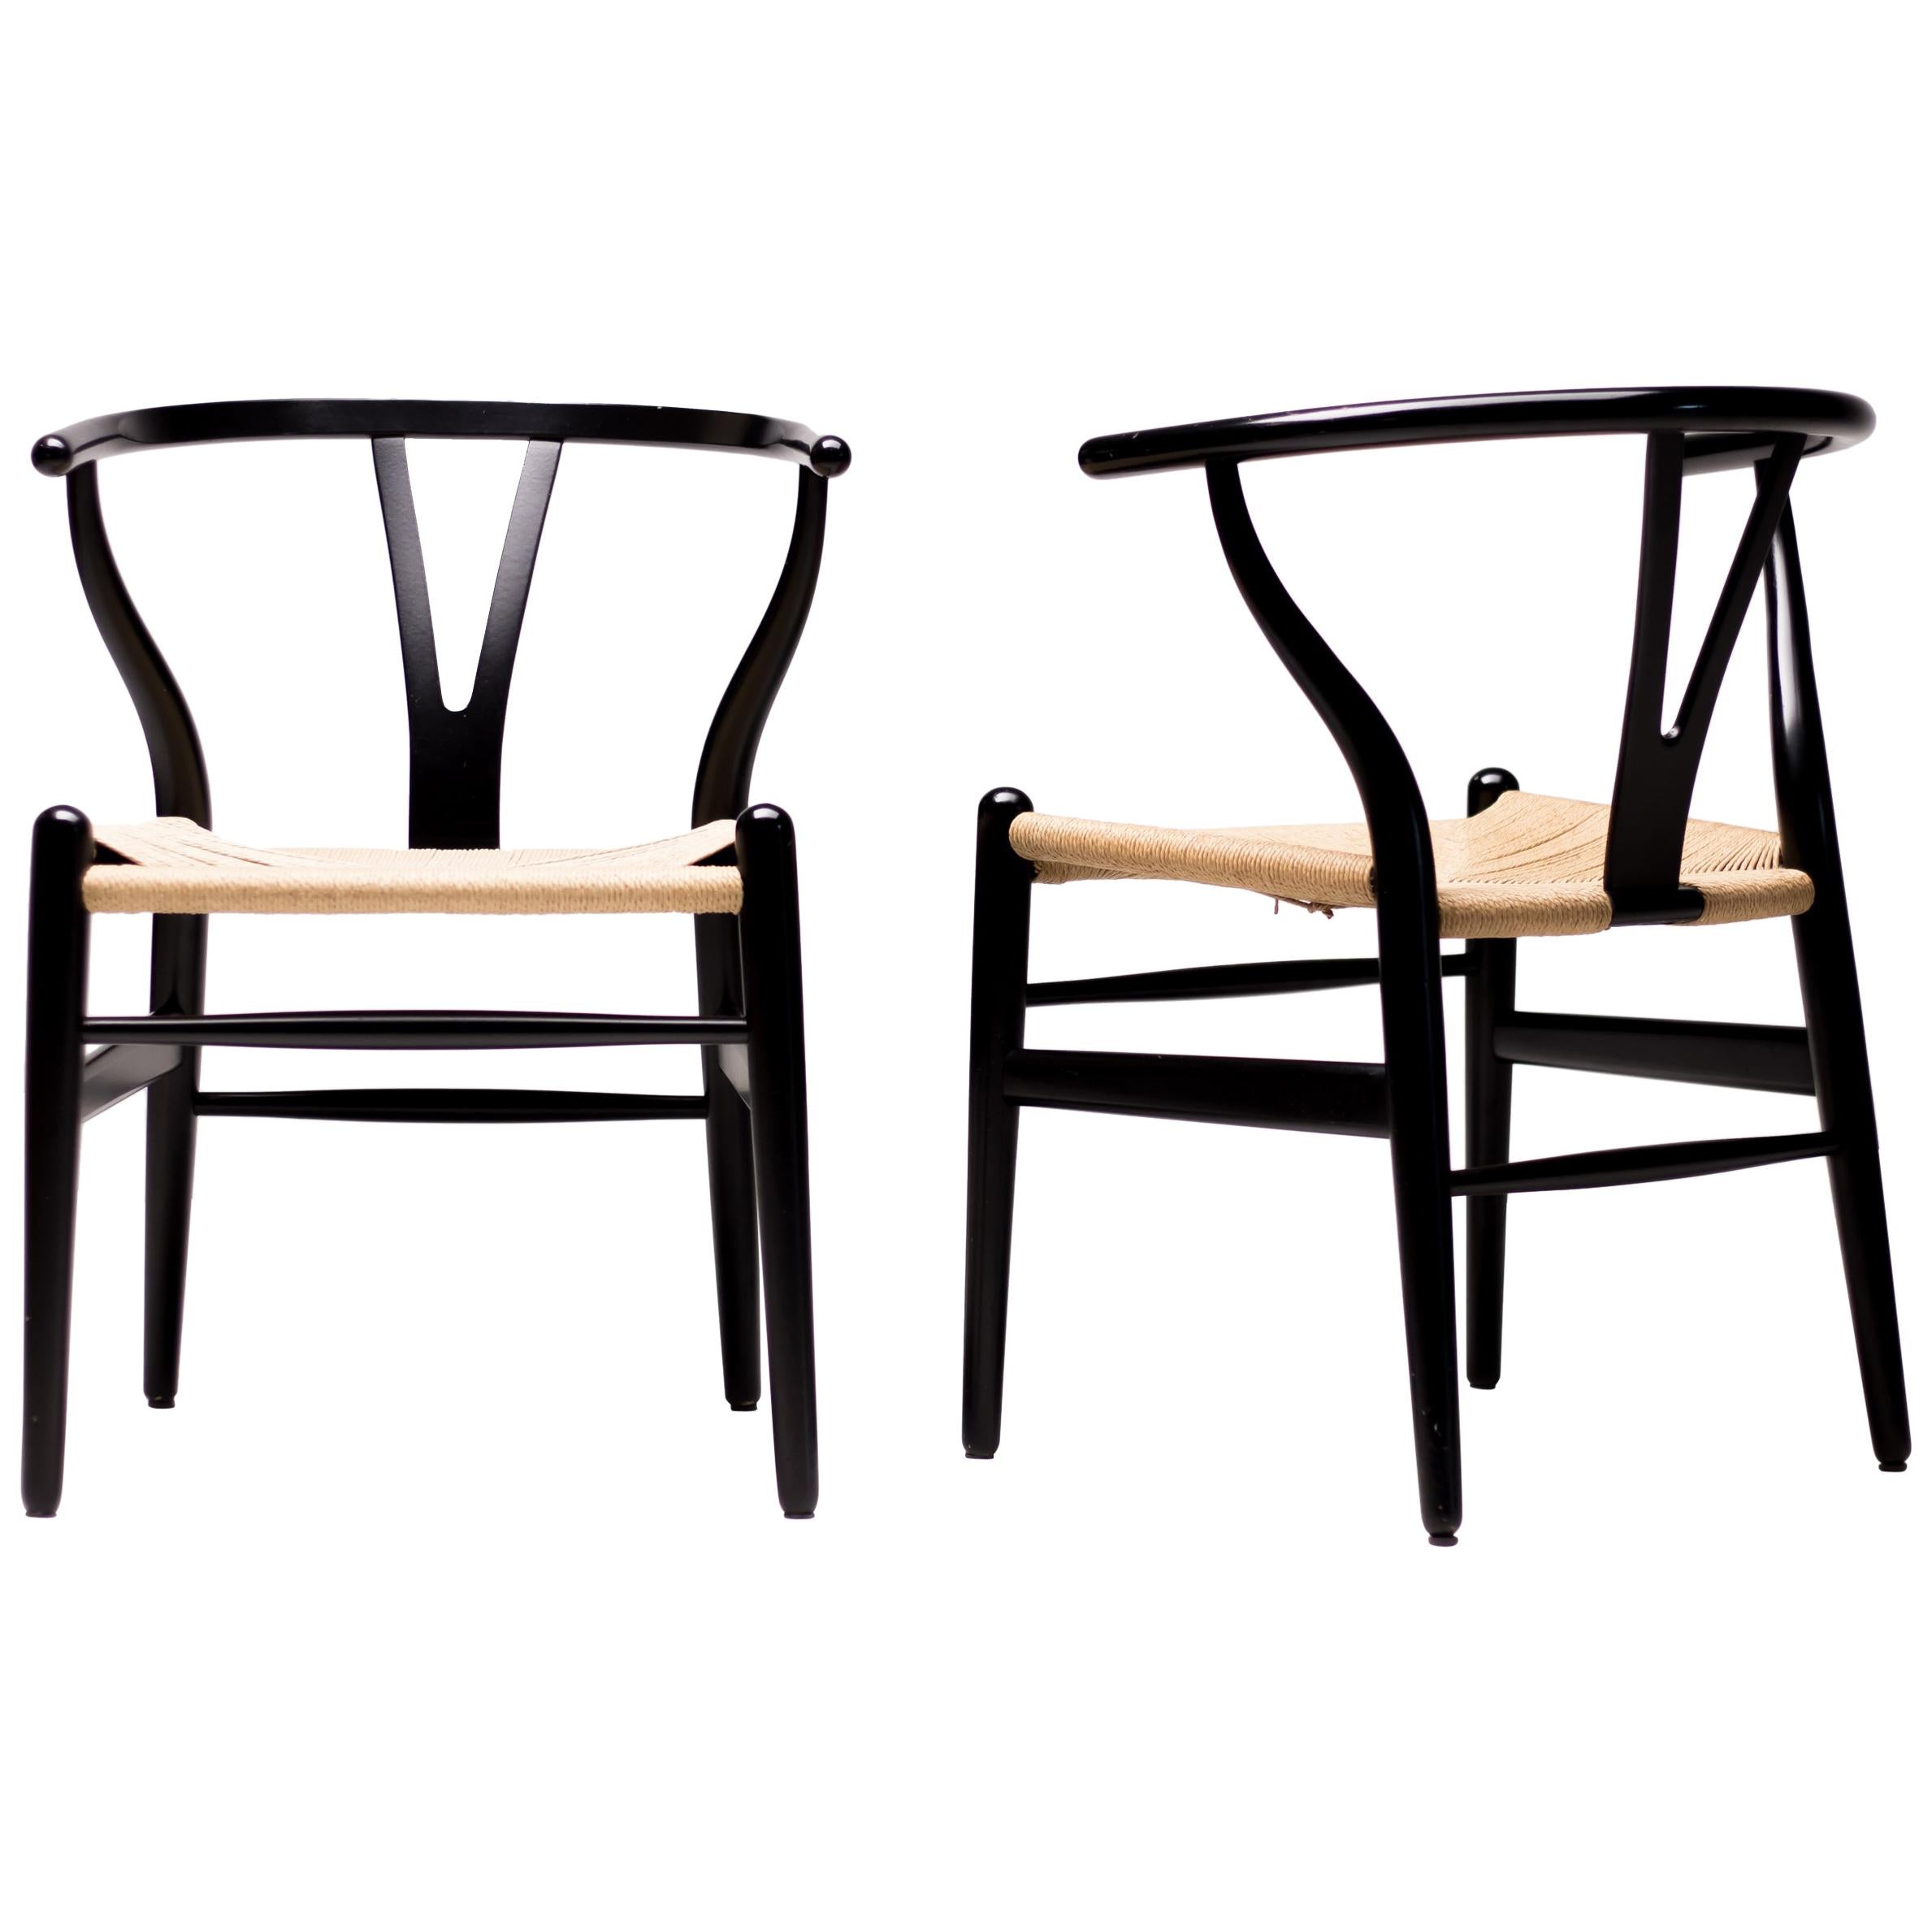 Pair of Ebonized Hans Wegner for Carl Hansen CH-24 Wishbone Chairs